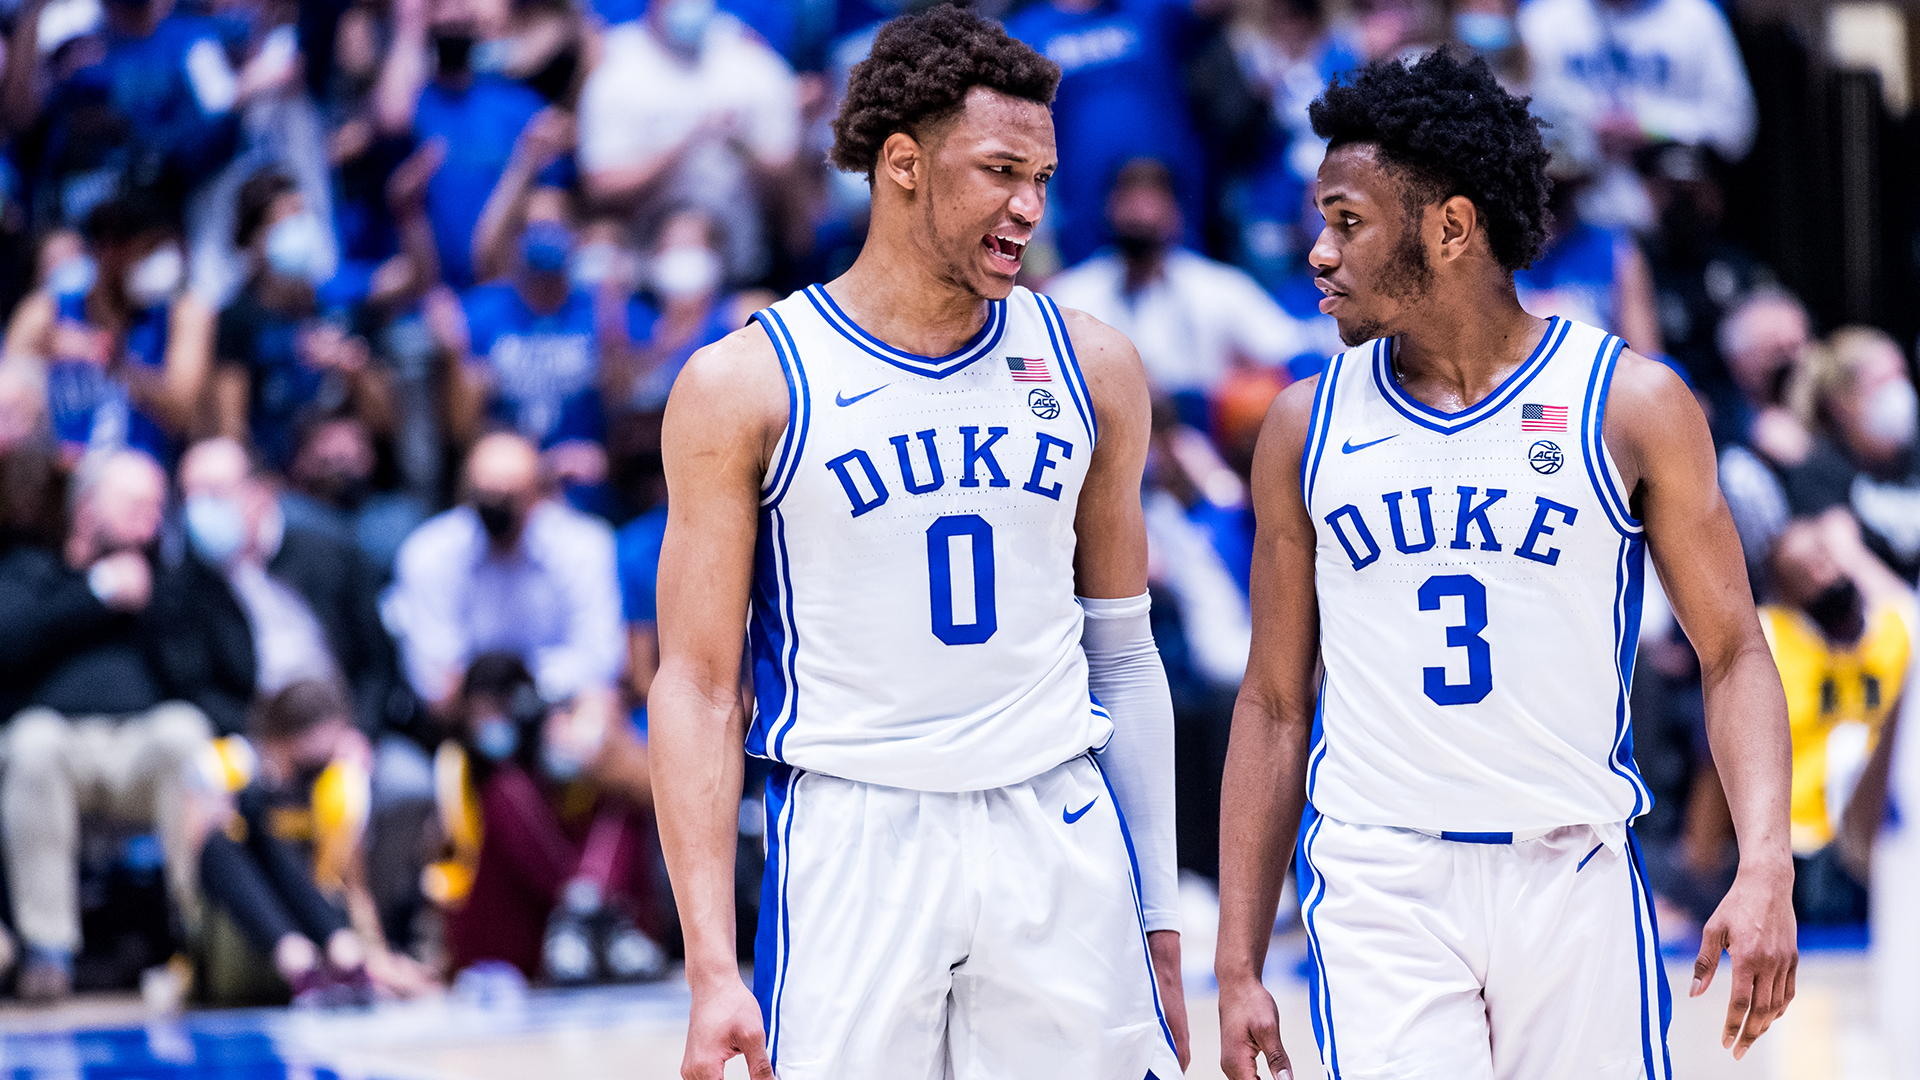 Duke's Resurgence A Tale of Grit, Talent, and Overcoming Early Season Adversity